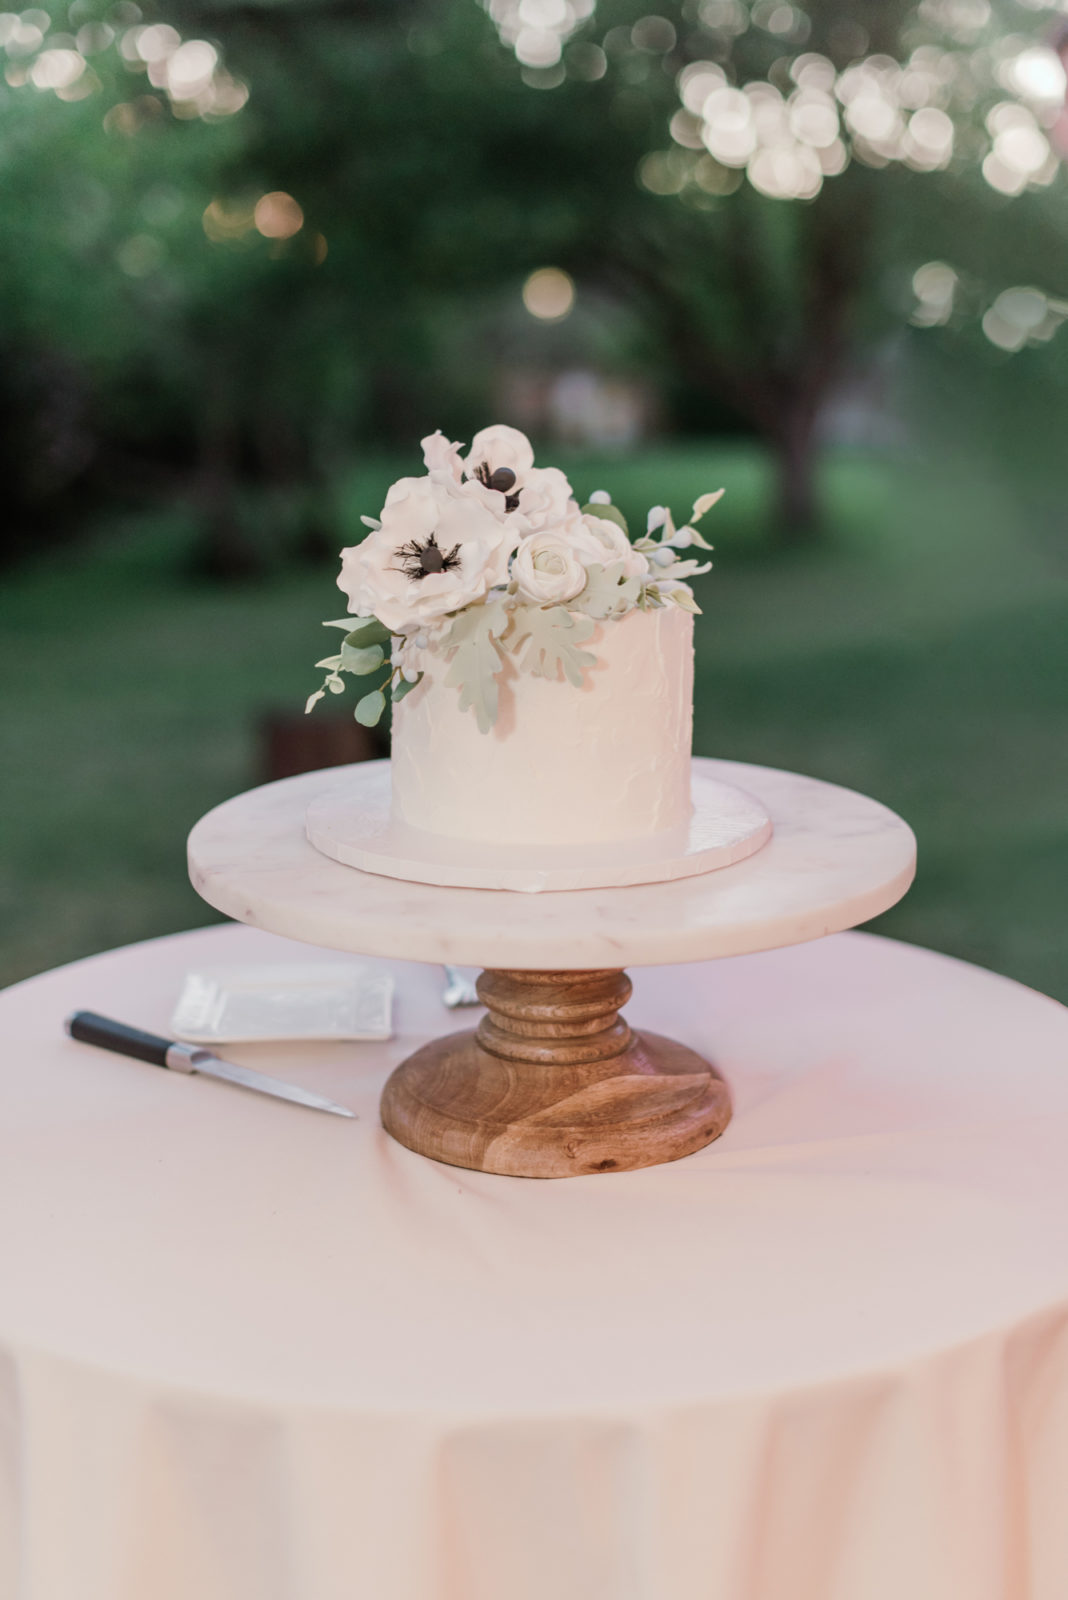 Single tier wedding cake from Bake My Day